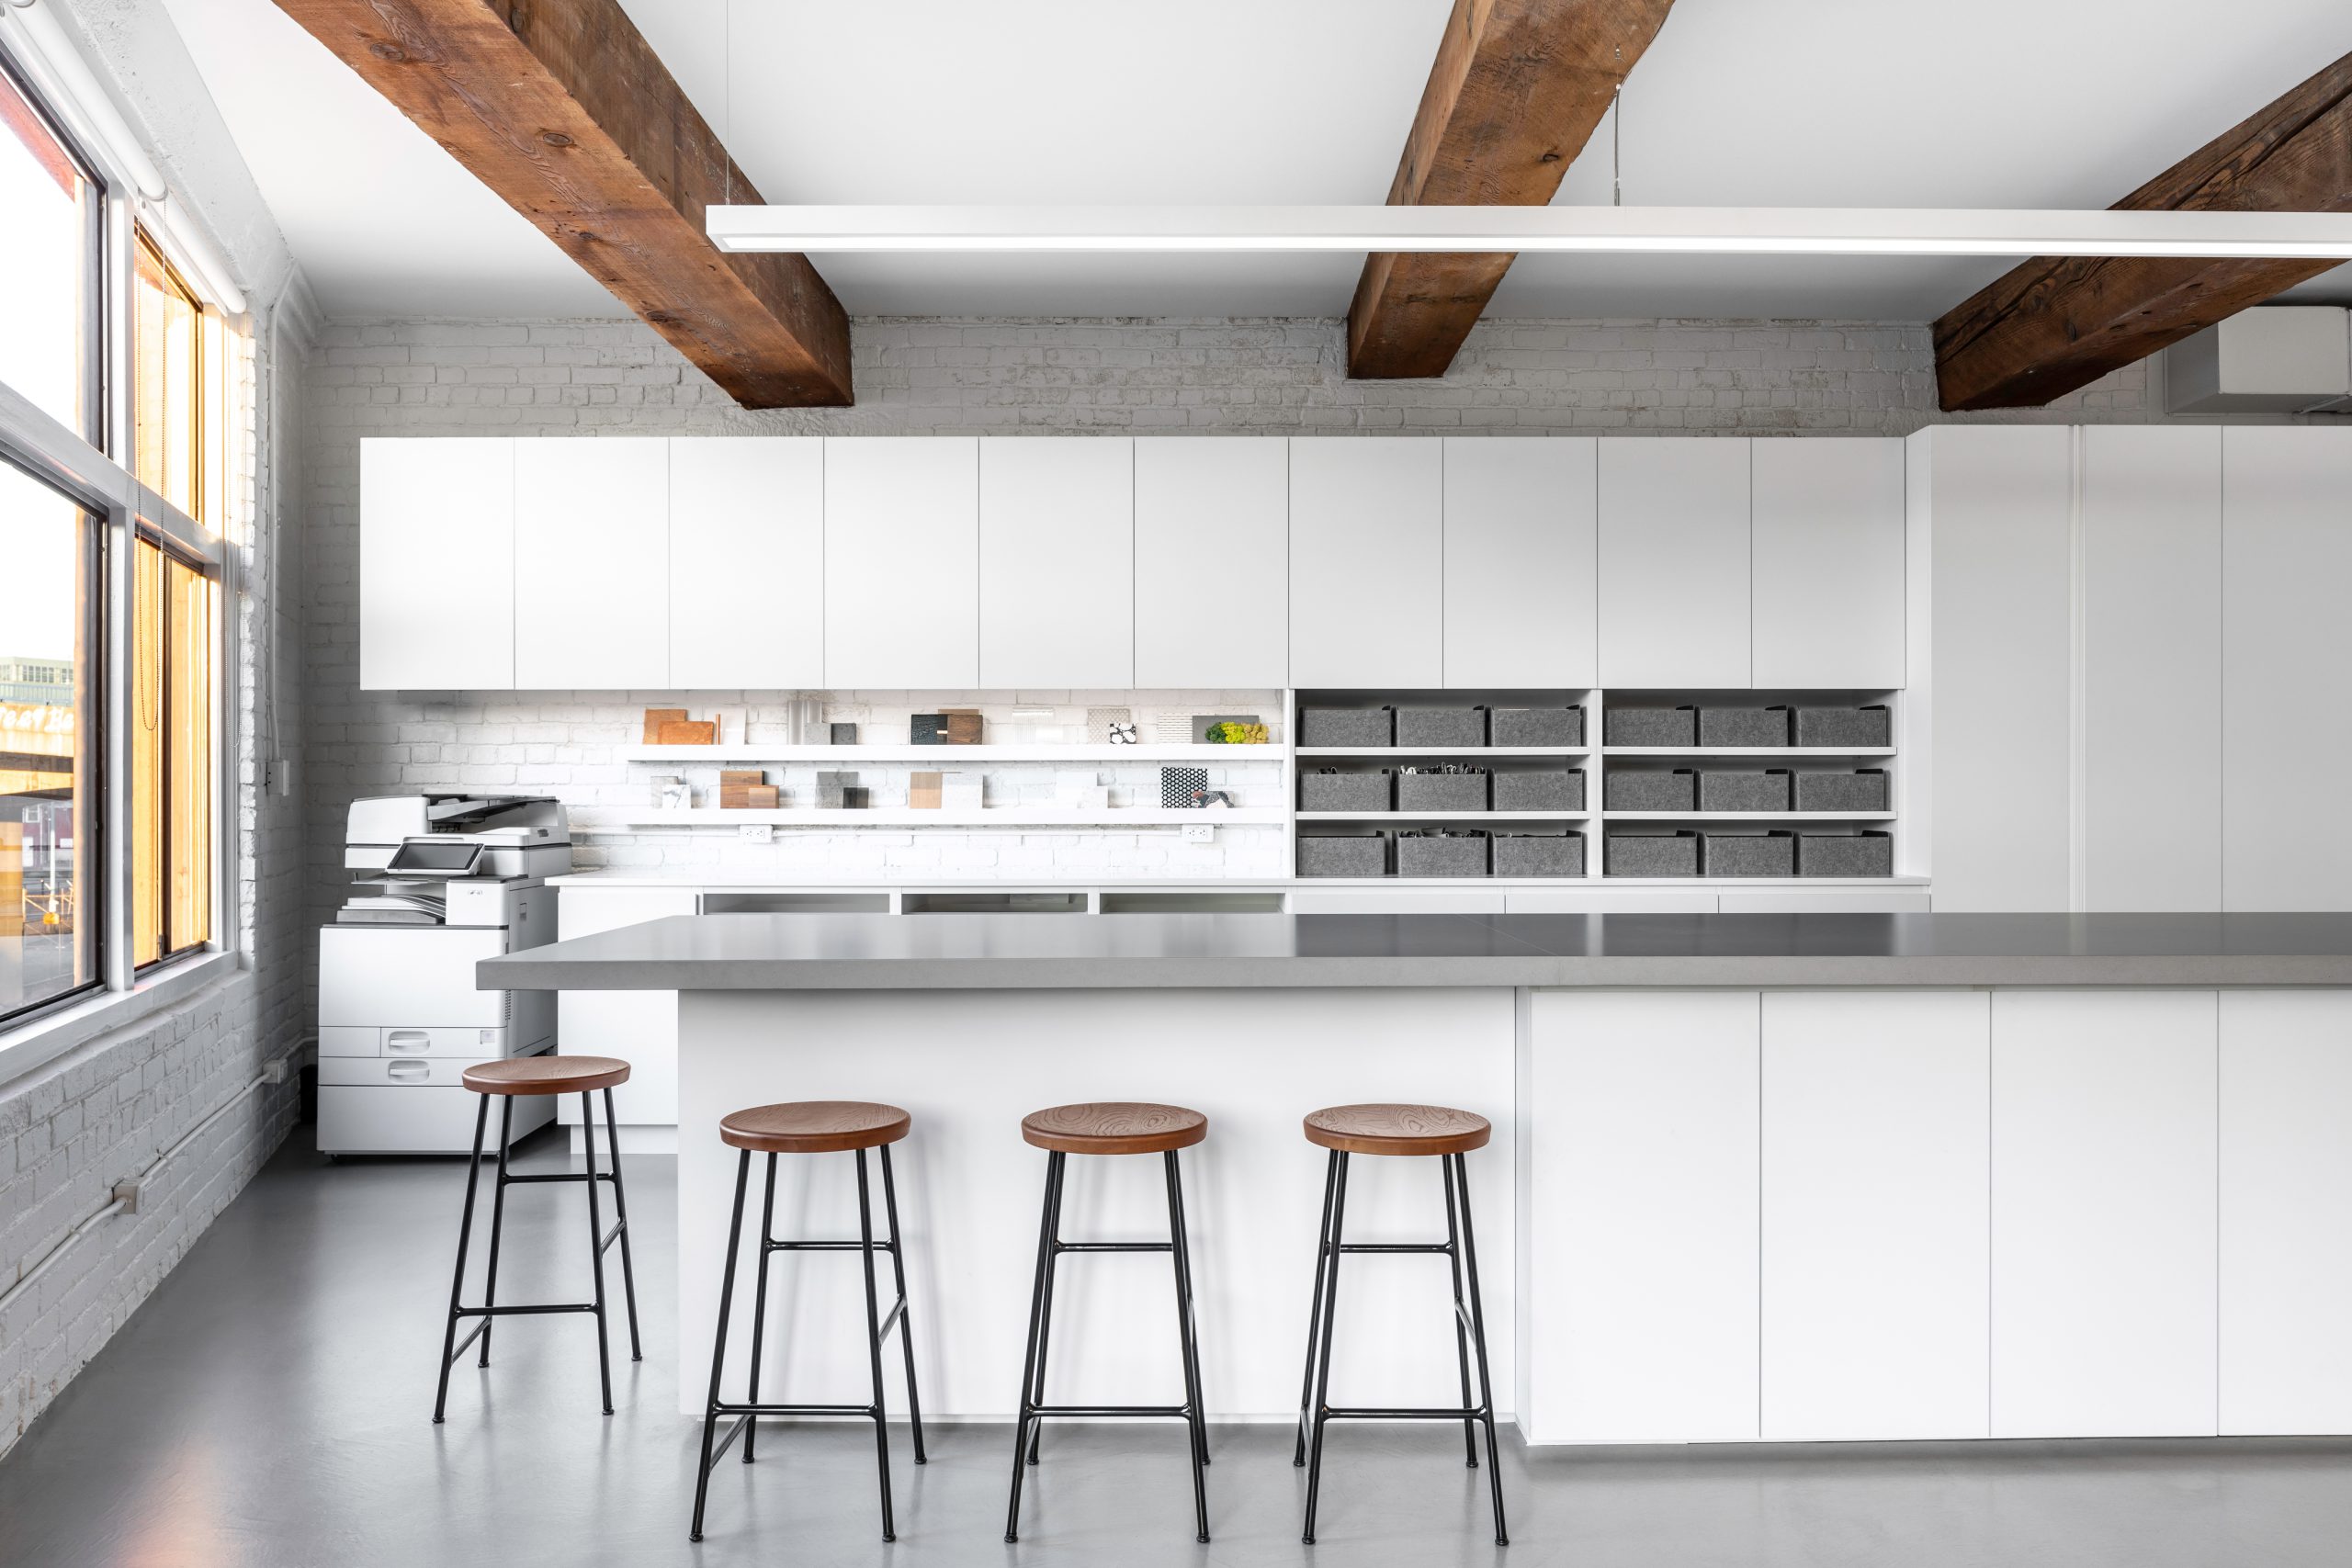 Cutler Studio in Vancouver BC Head Office Interior Design Kitchen Area by Cutler